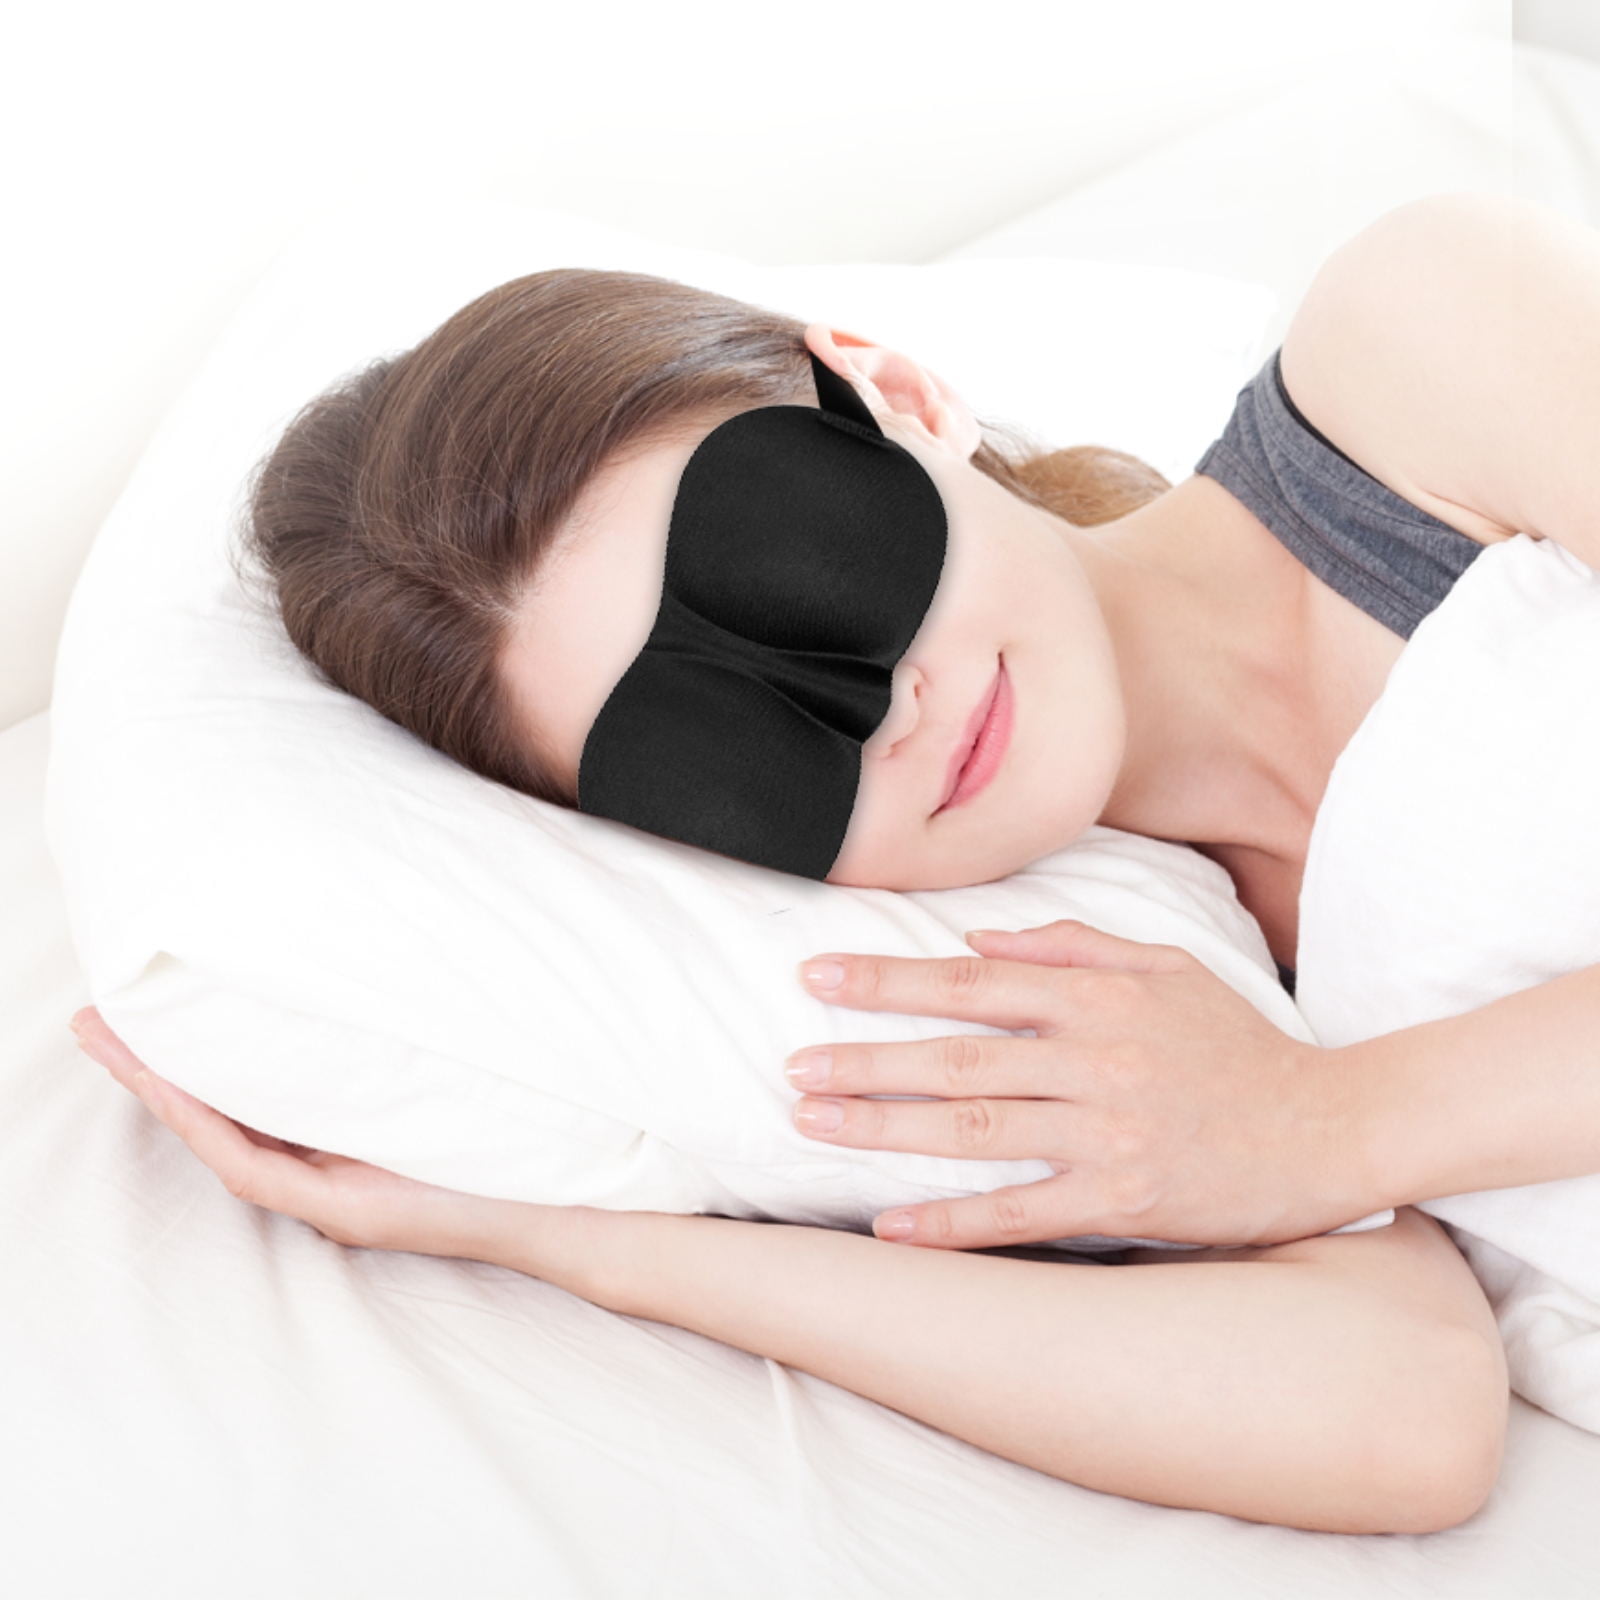 3Pcs Satin Eye Mask Blindfold Blindfolds for Party Games Sleeping